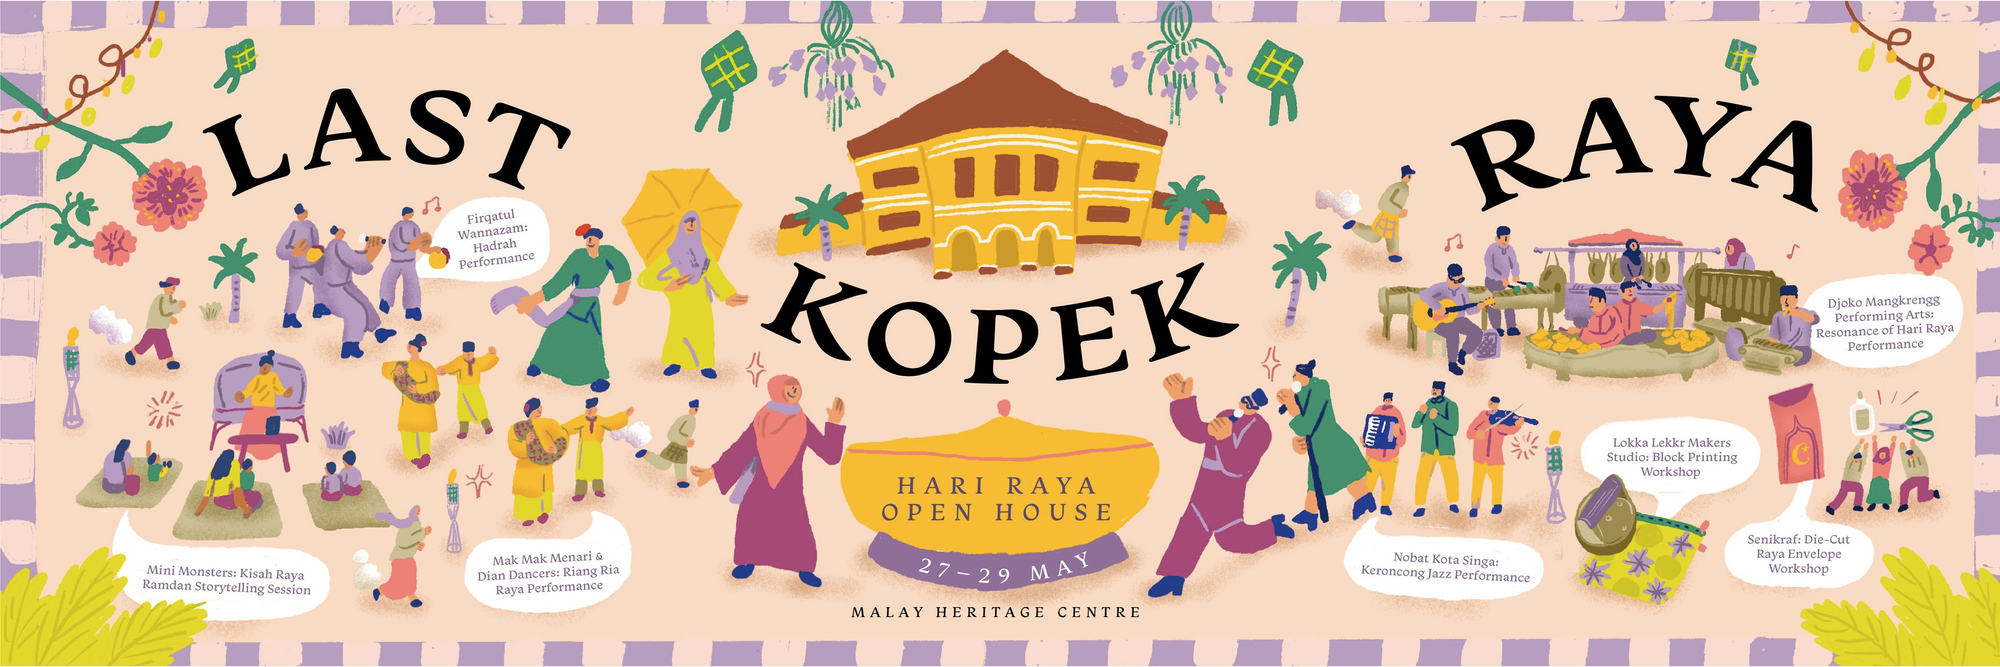 poster of last kopek raya, malay heritage centre hari raya open house